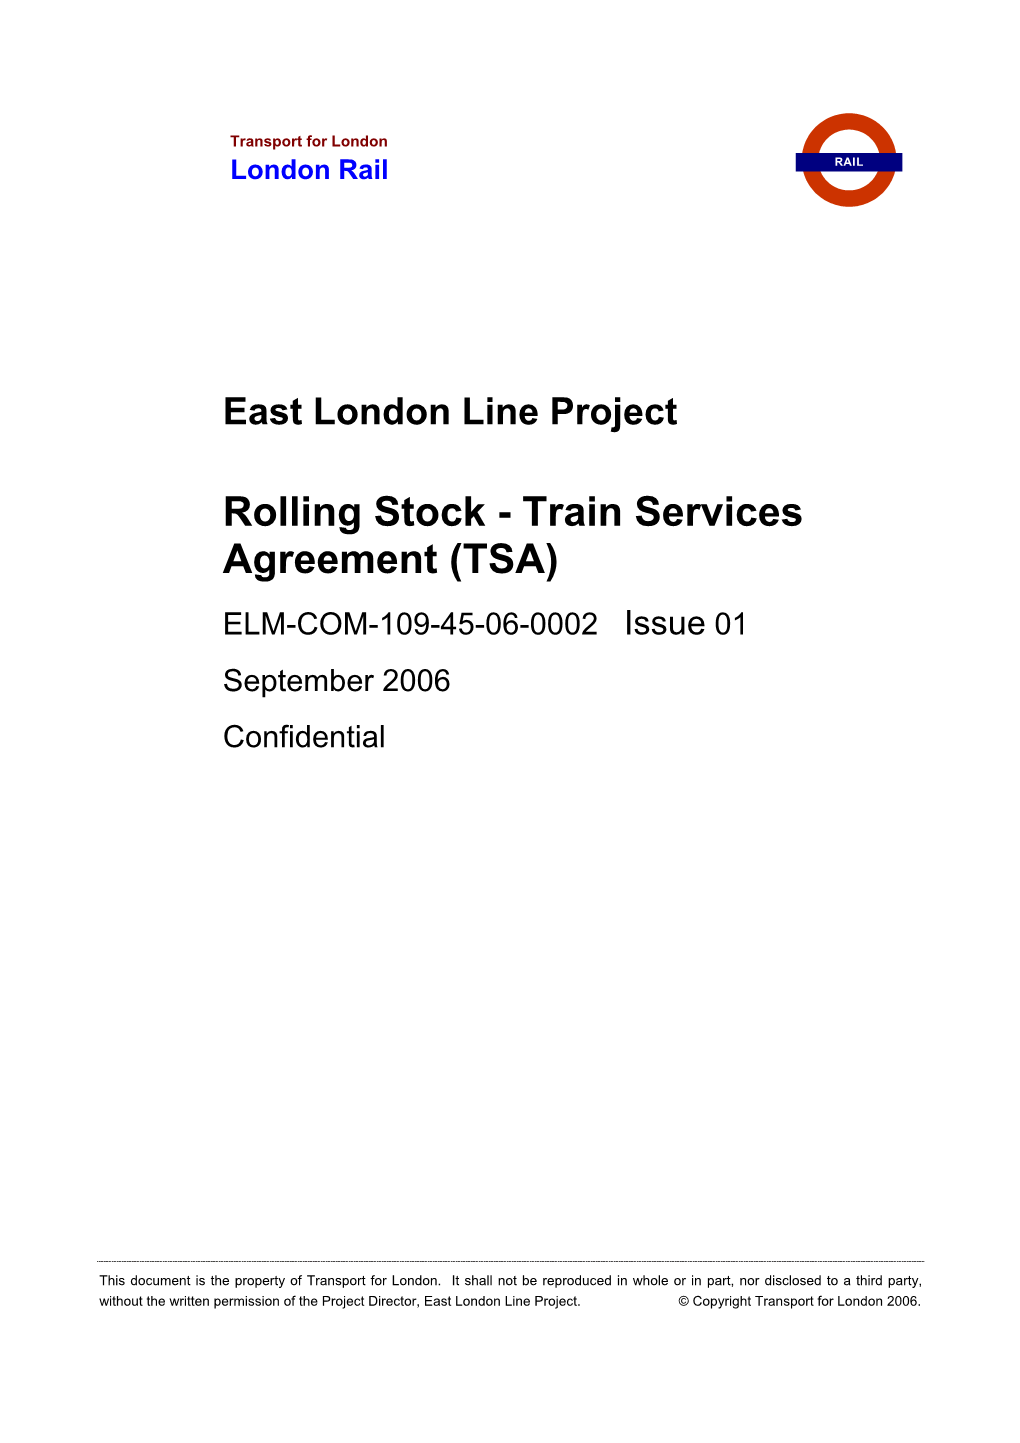 Rolling Stock - Train Services Agreement (TSA) ELM-COM-109-45-06-0002 Issue 01 September 2006 Confidential